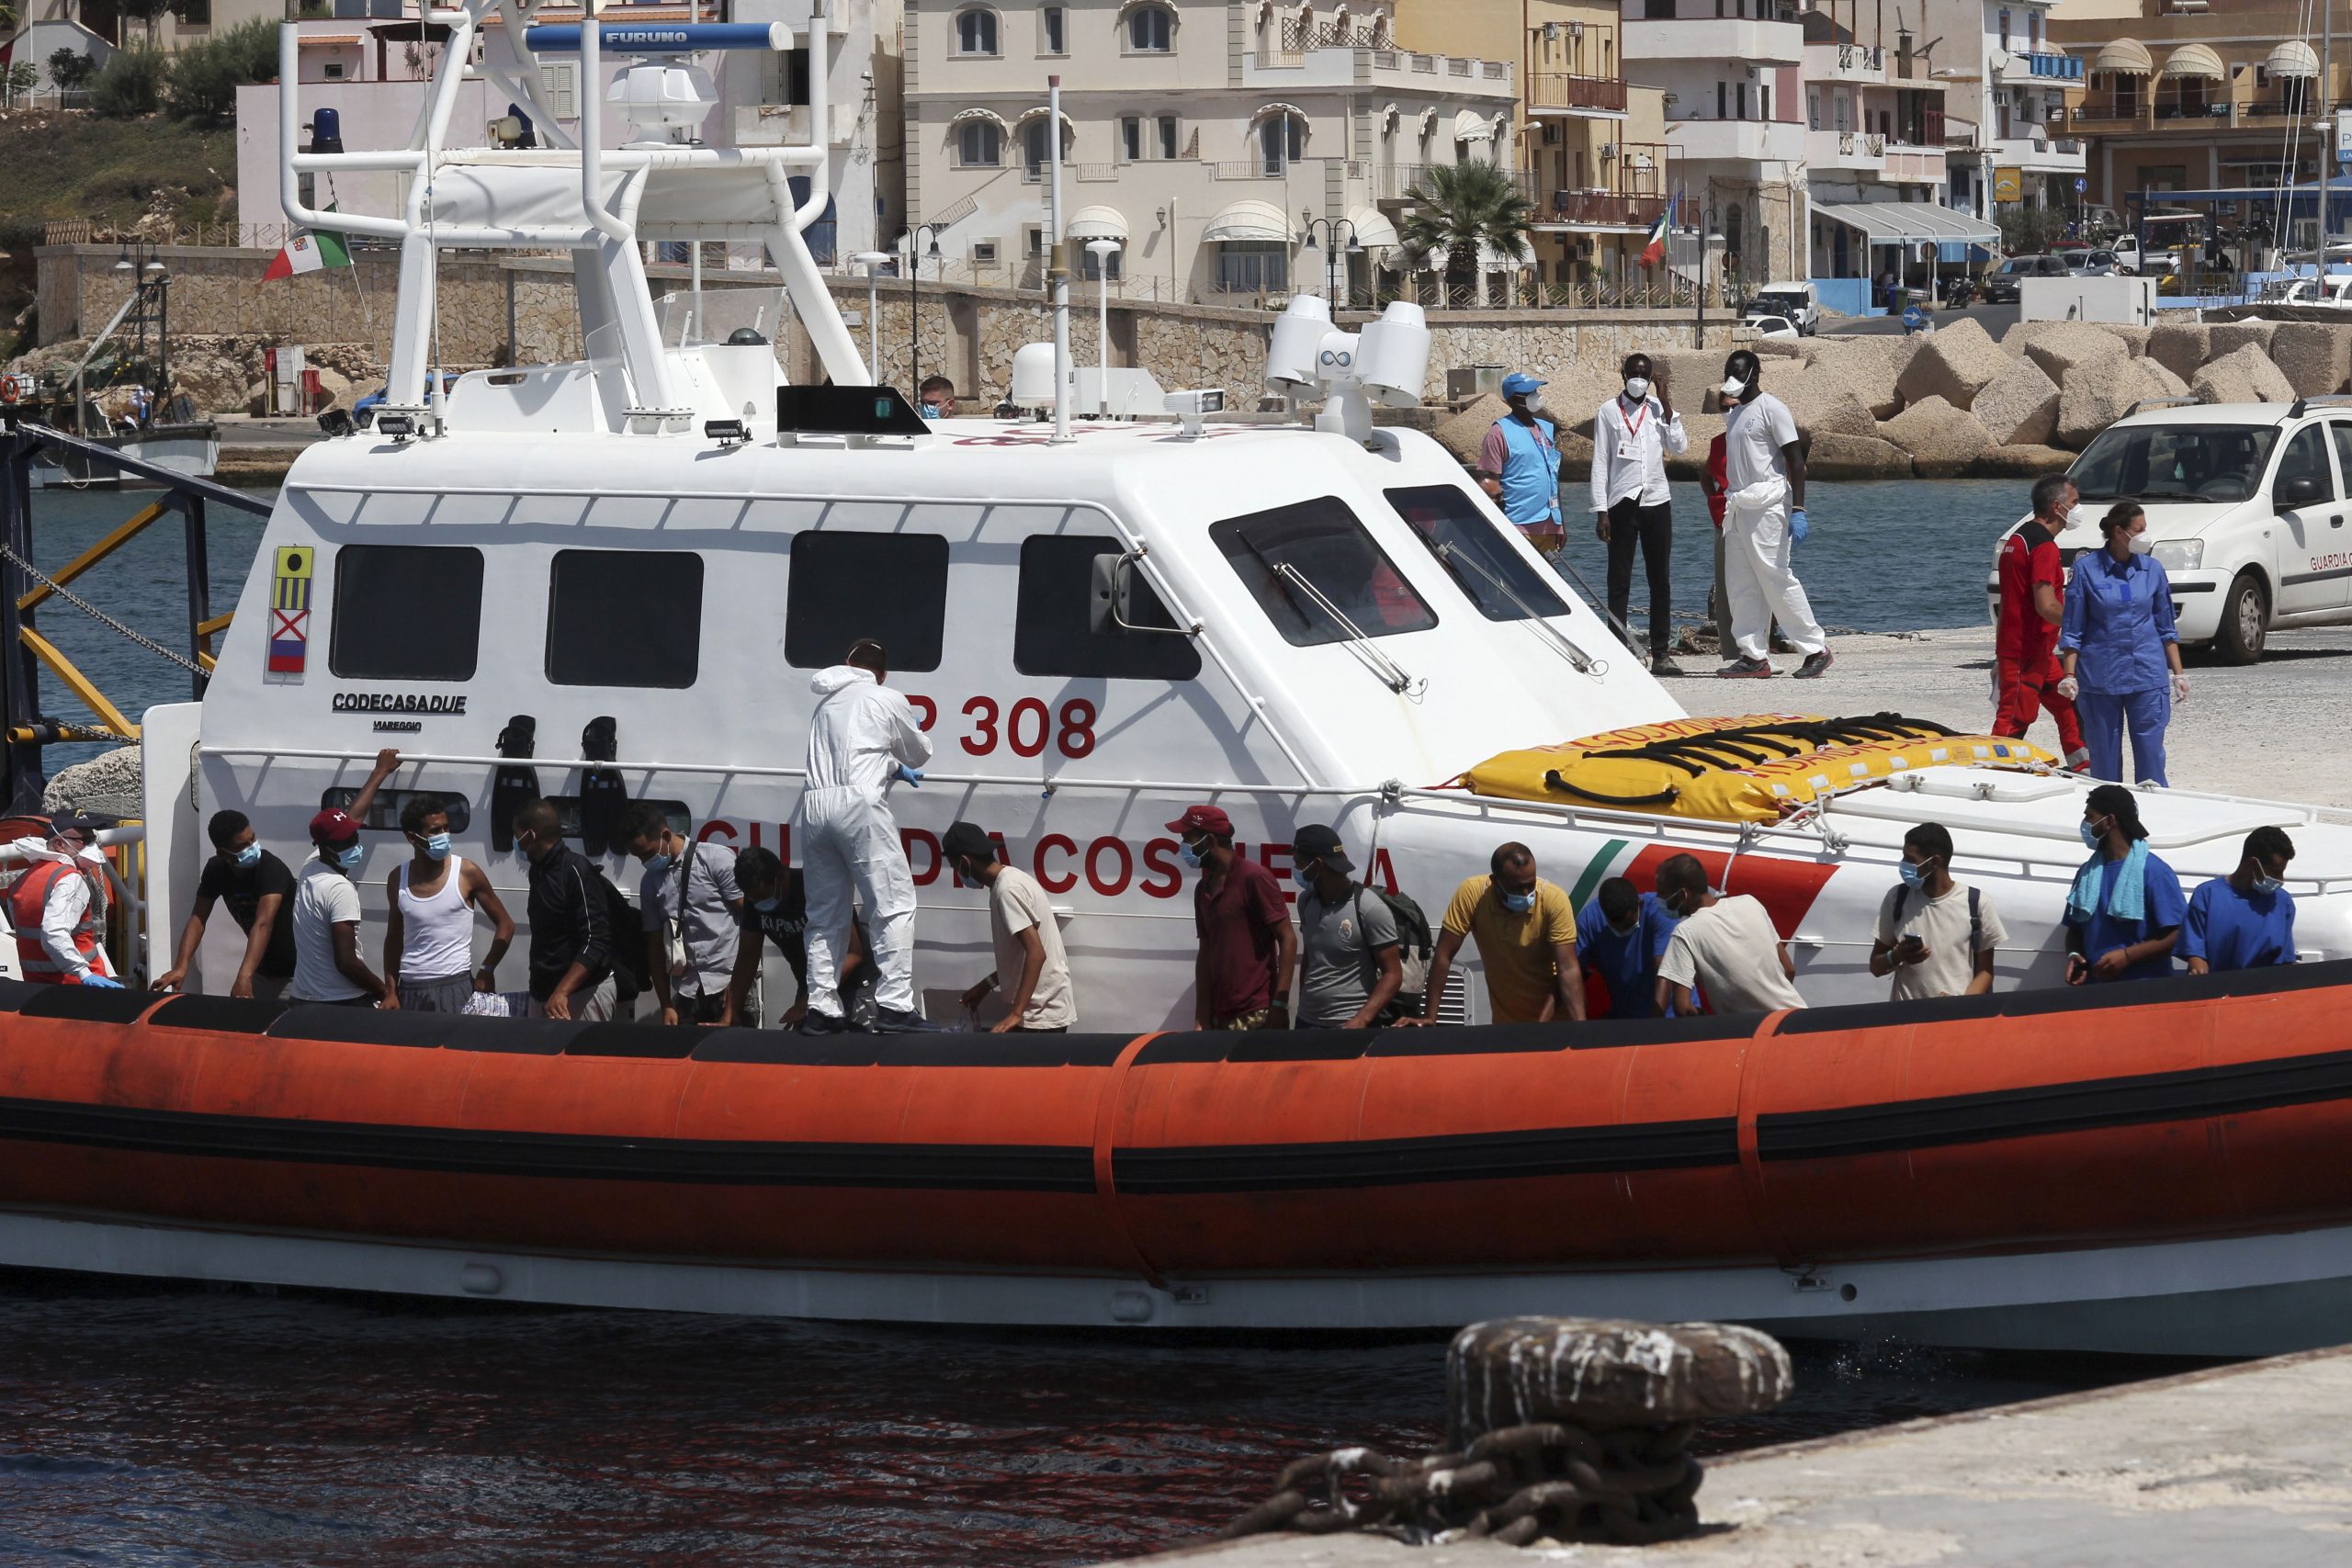 Italija evakuisala 2.400 migranata sa Lampeduze na Siciliju 1